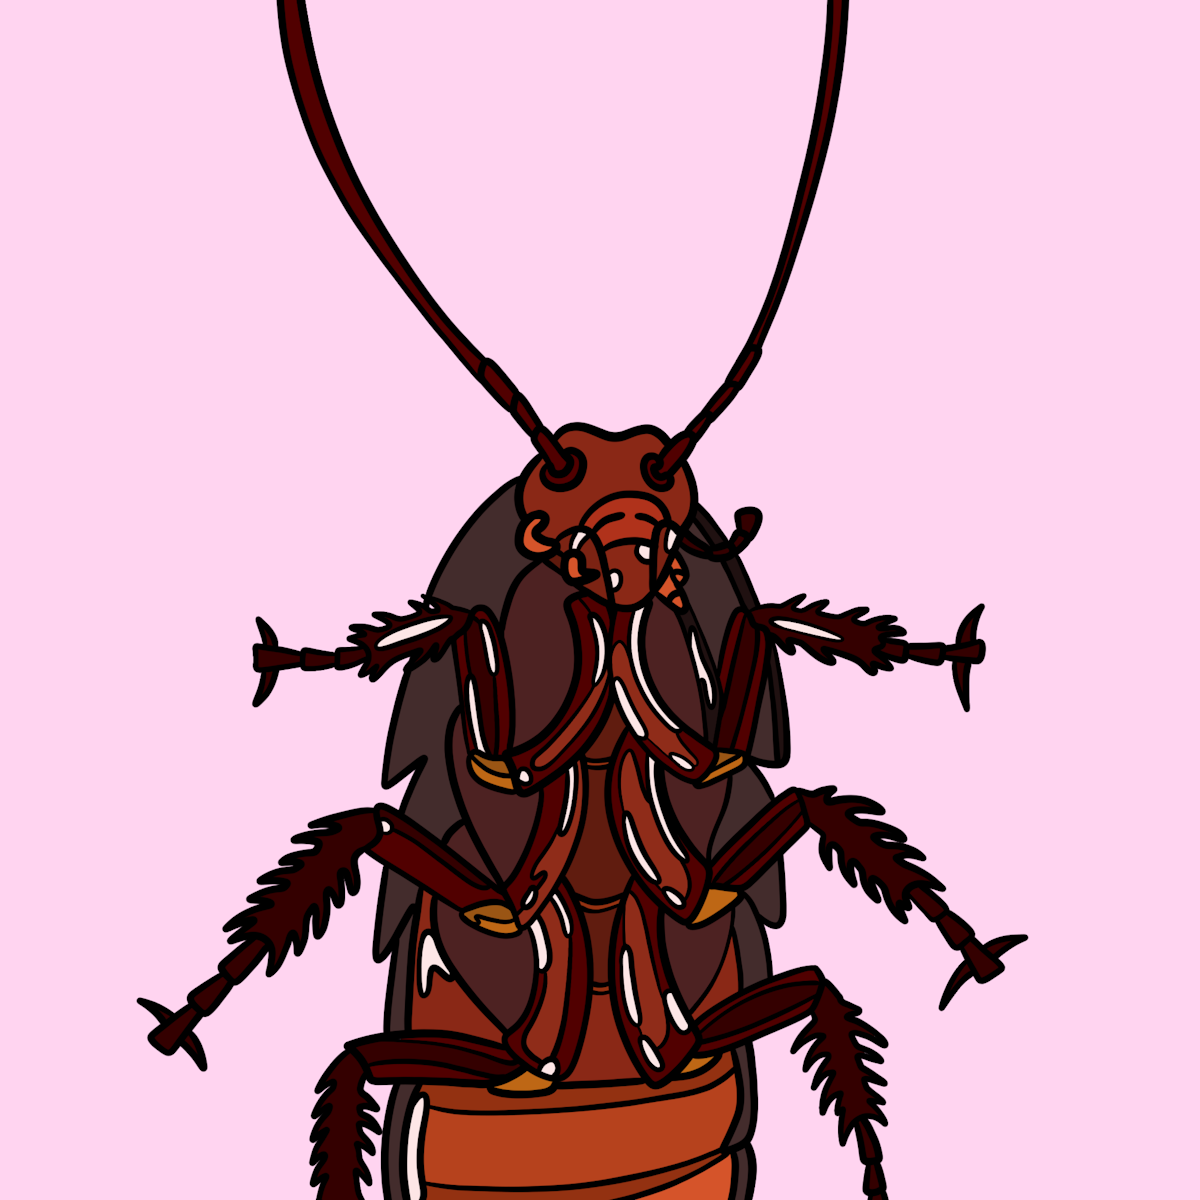 illustration of cockroach from Kafkas book Metamorphosis